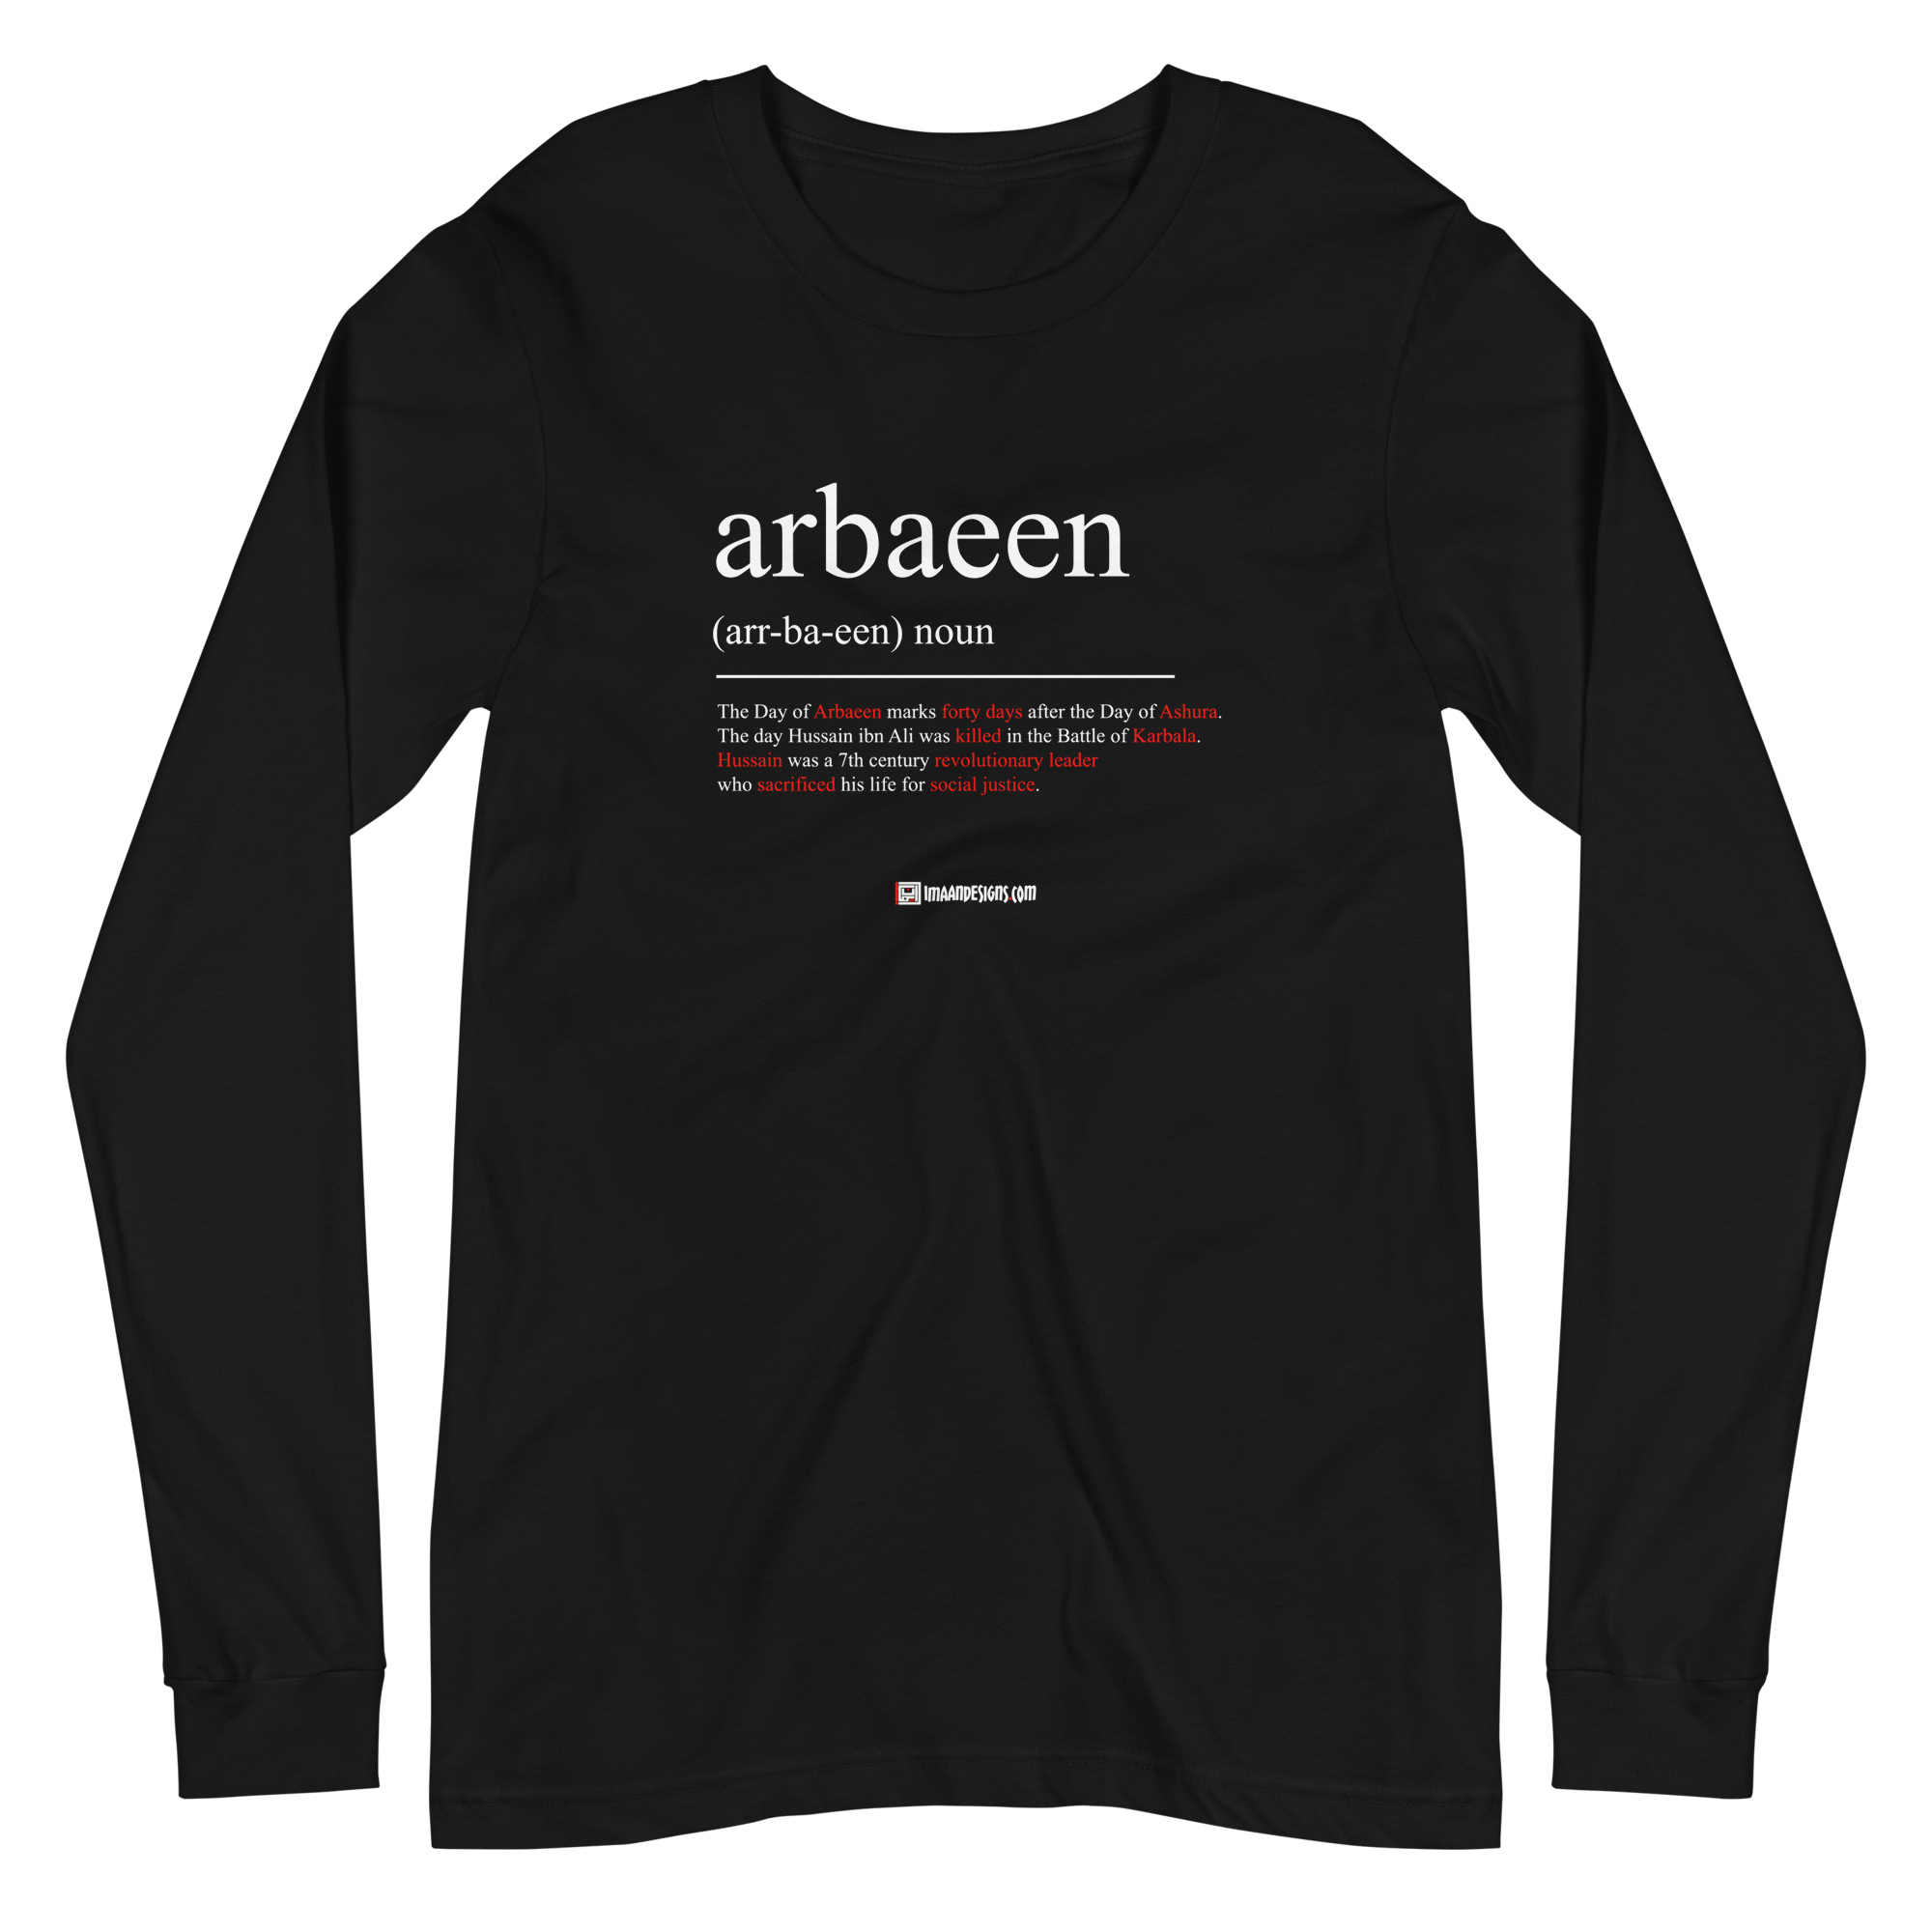 Arbaeen Defined - Adult Long Sleeve